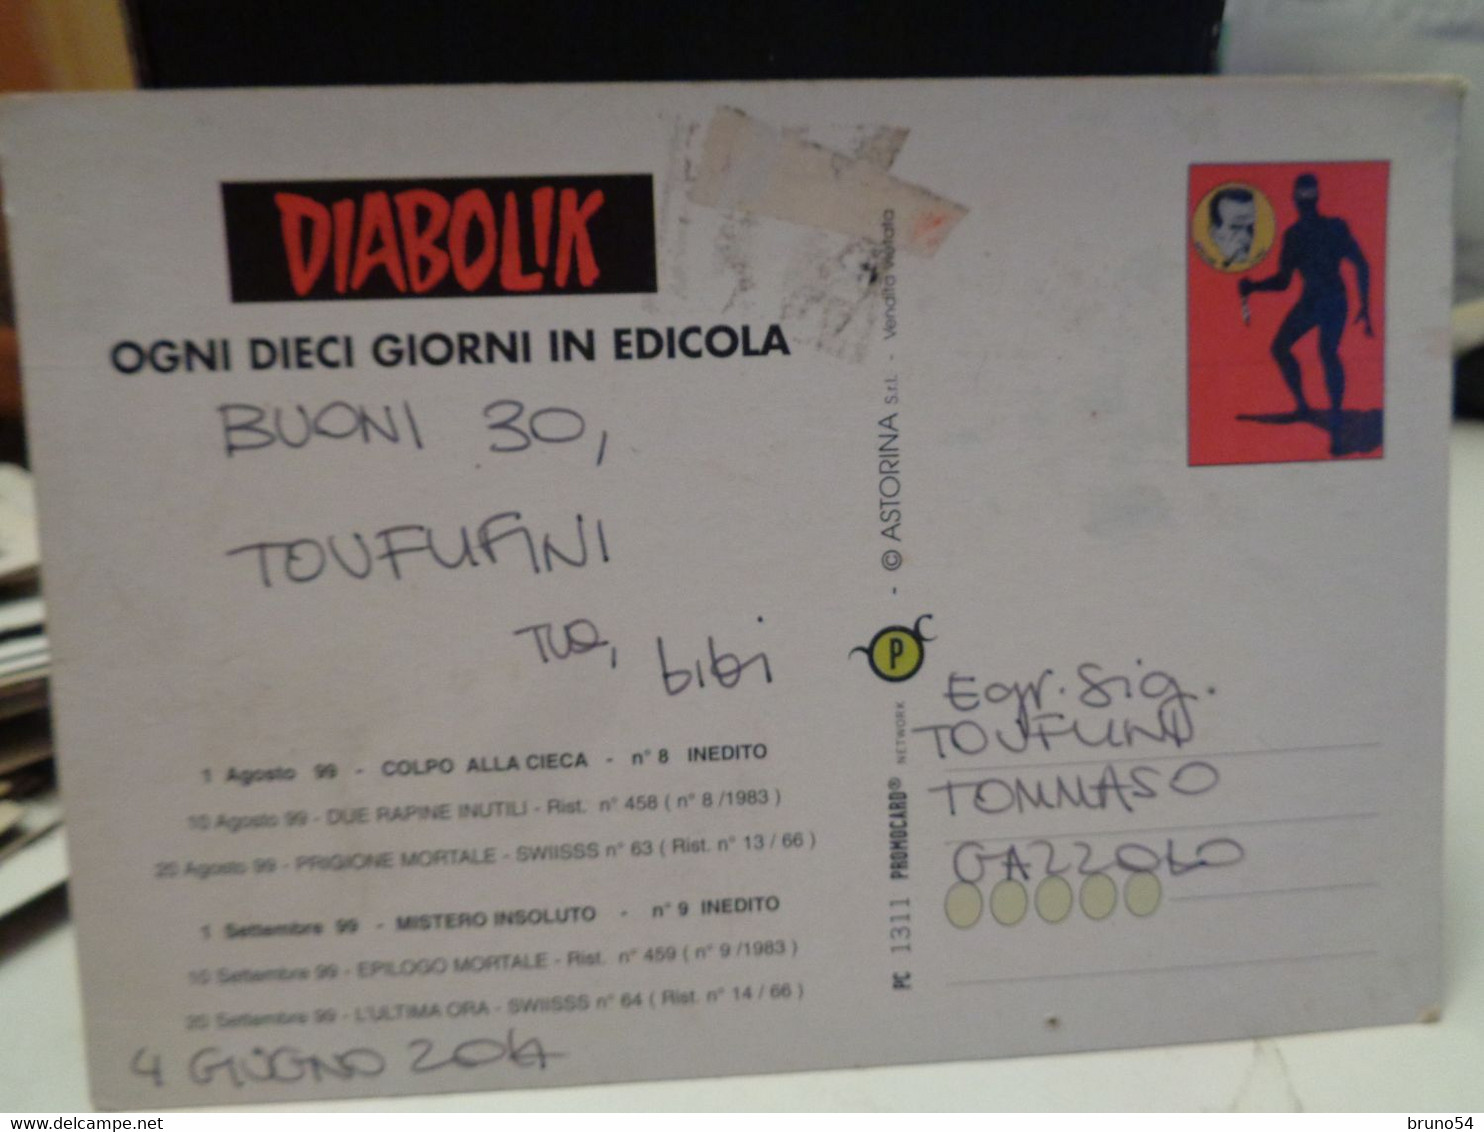 Cartolina Diabolik 4 Giugno 2014 Promocard N.1311 - Fumetti